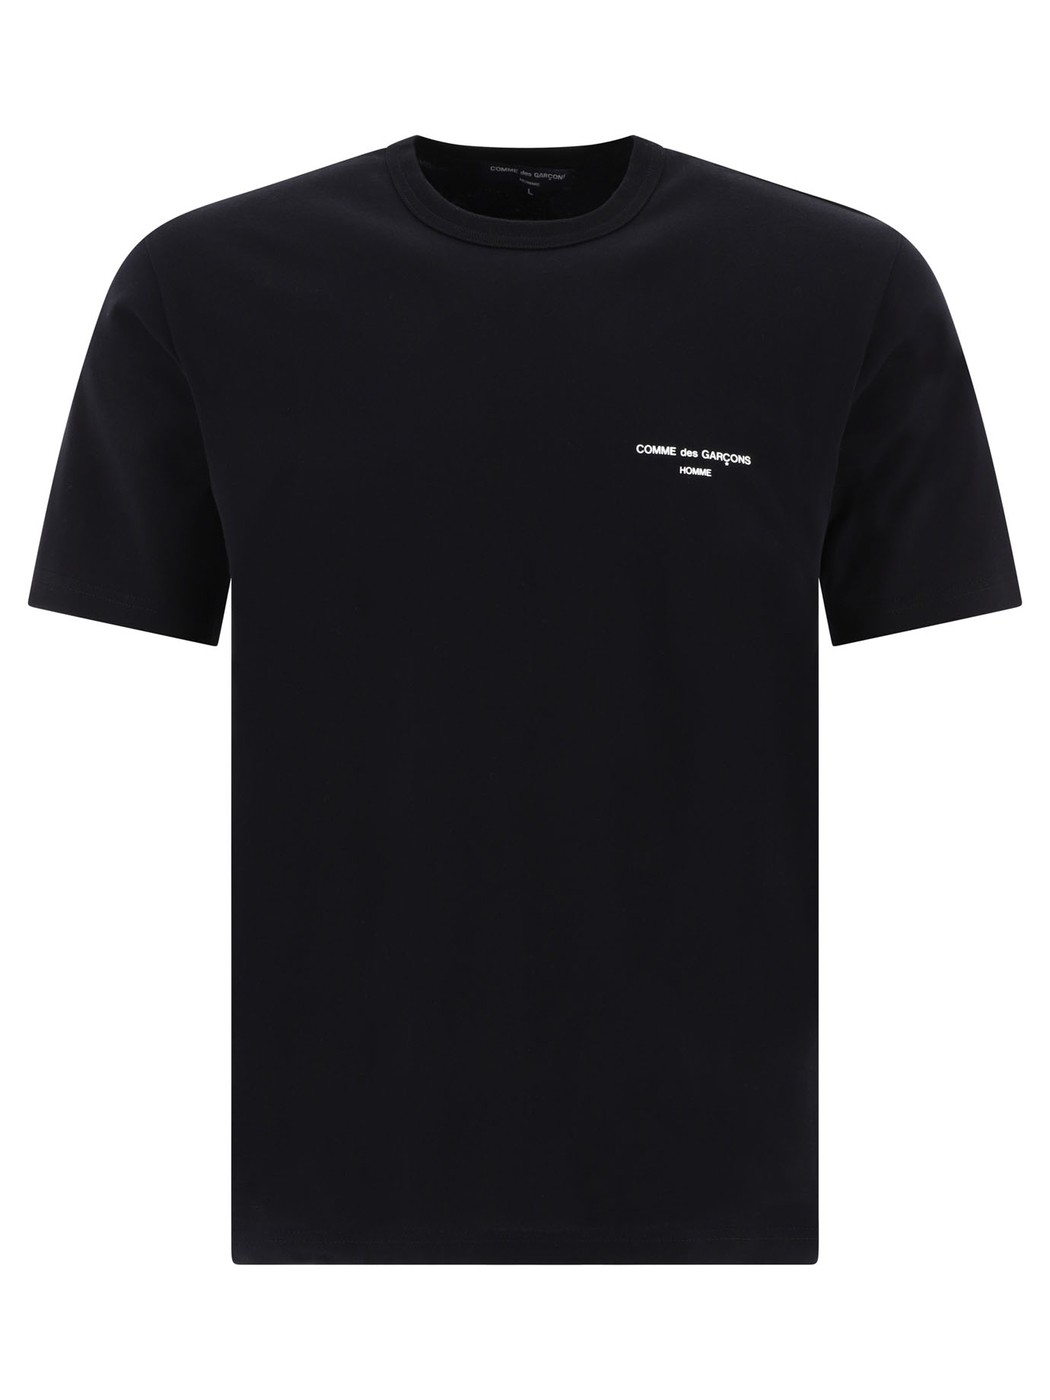 COMME DES GARCONS HOMME コム・デ・ギャルソン・オム ブラック Black T-shirt with logo Tシャツ メンズ 春夏2024 HM-T101-S241 BLACK 【関税・送料無料】【ラッピング無料】 vi